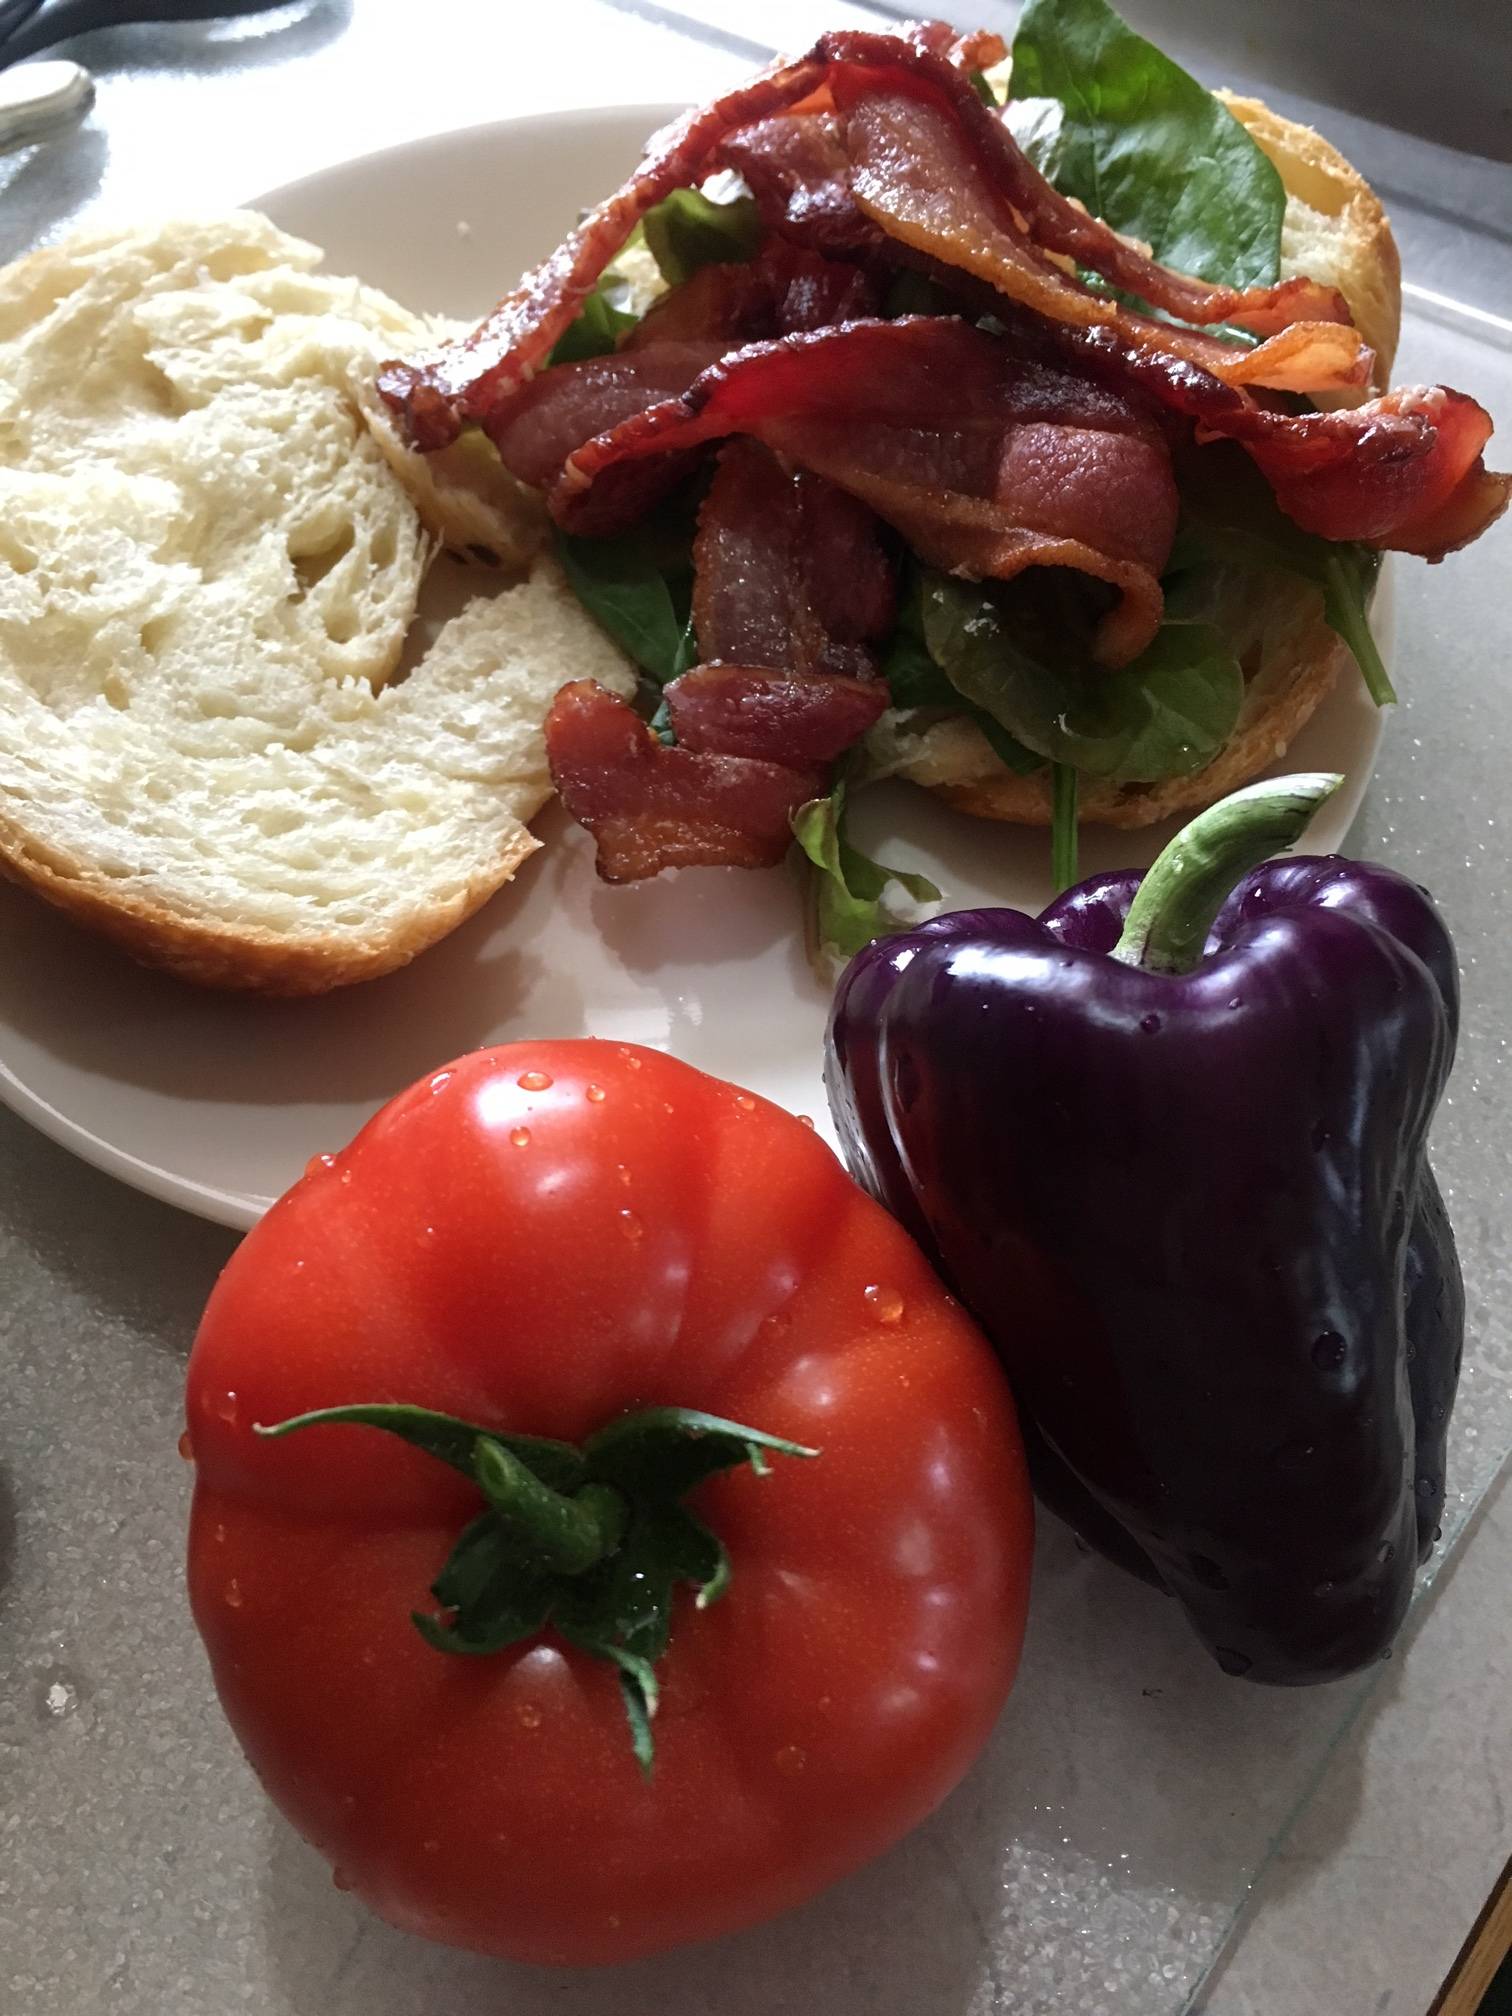 Tips on tomatoes and slugs